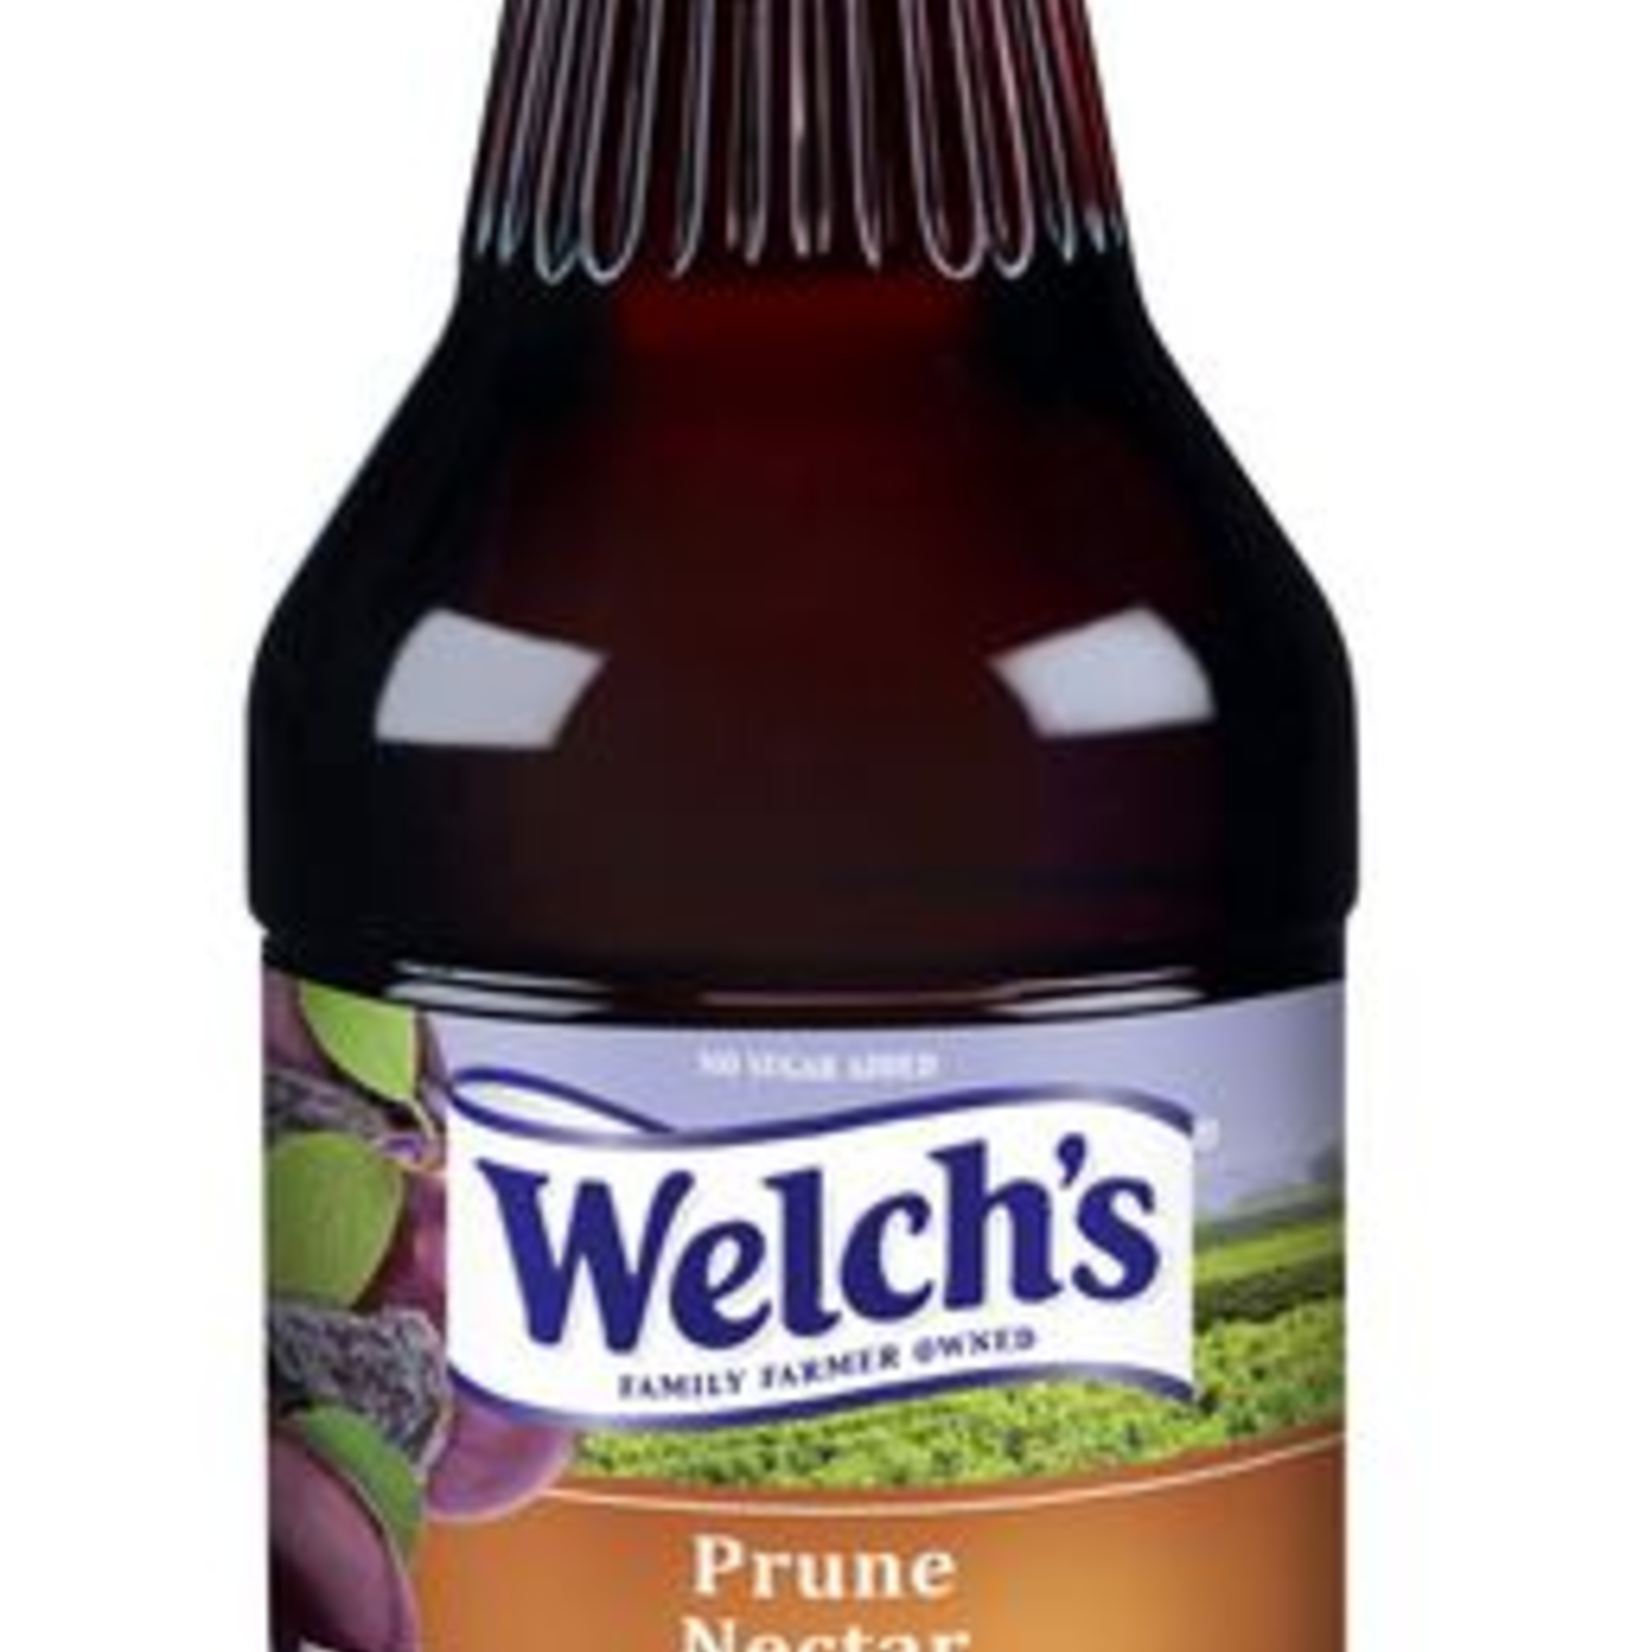 Welch's Prune Nectar 1.36L